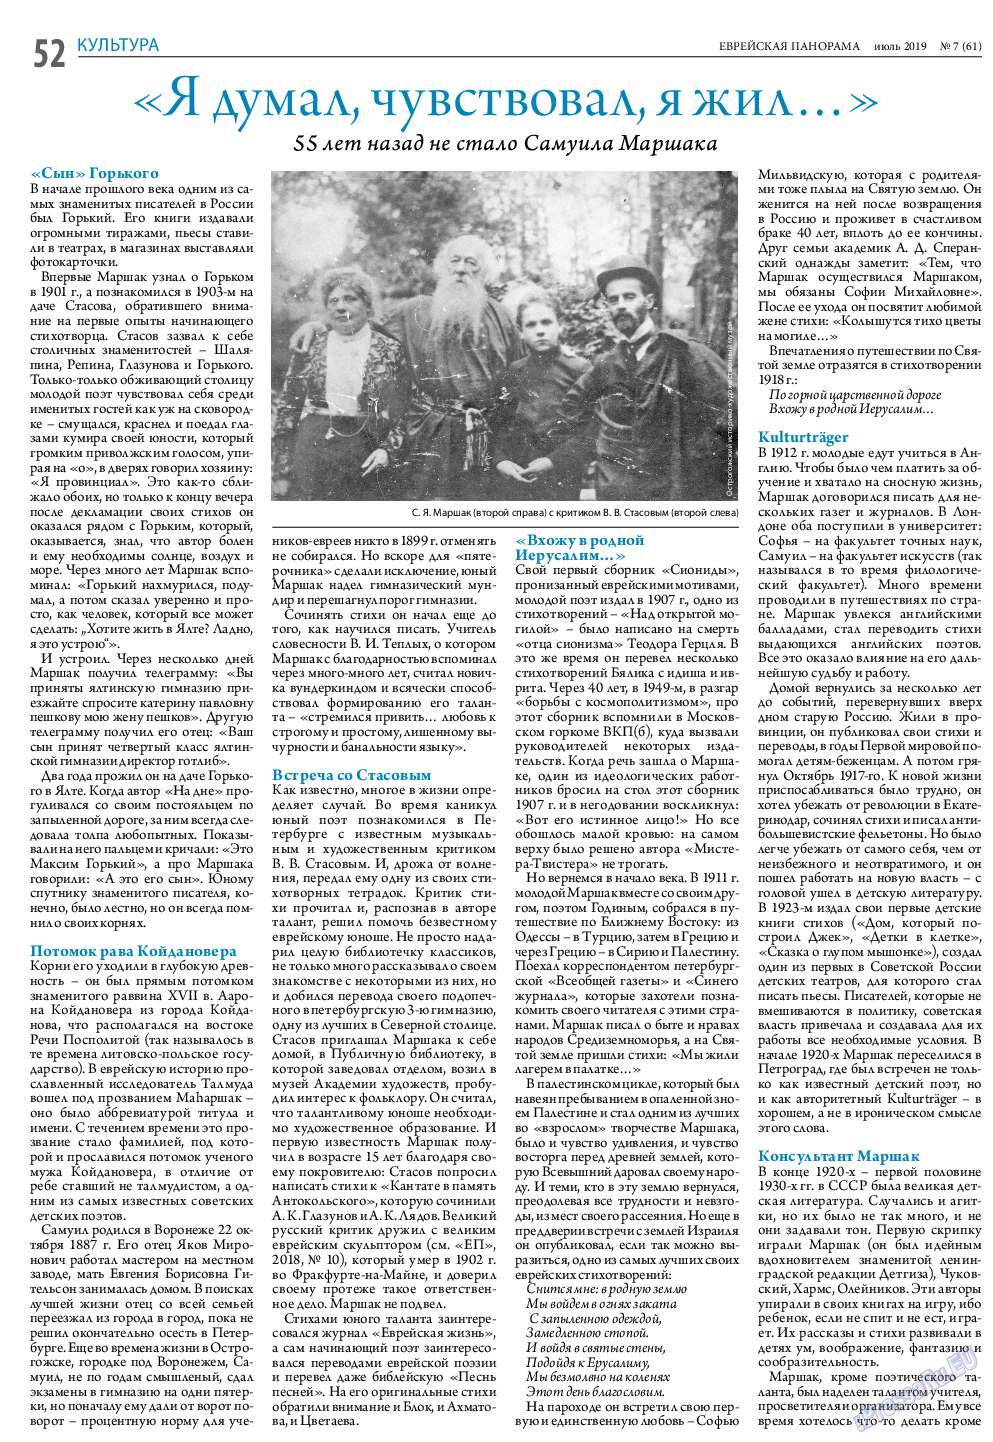 Еврейская панорама, газета. 2019 №7 стр.52